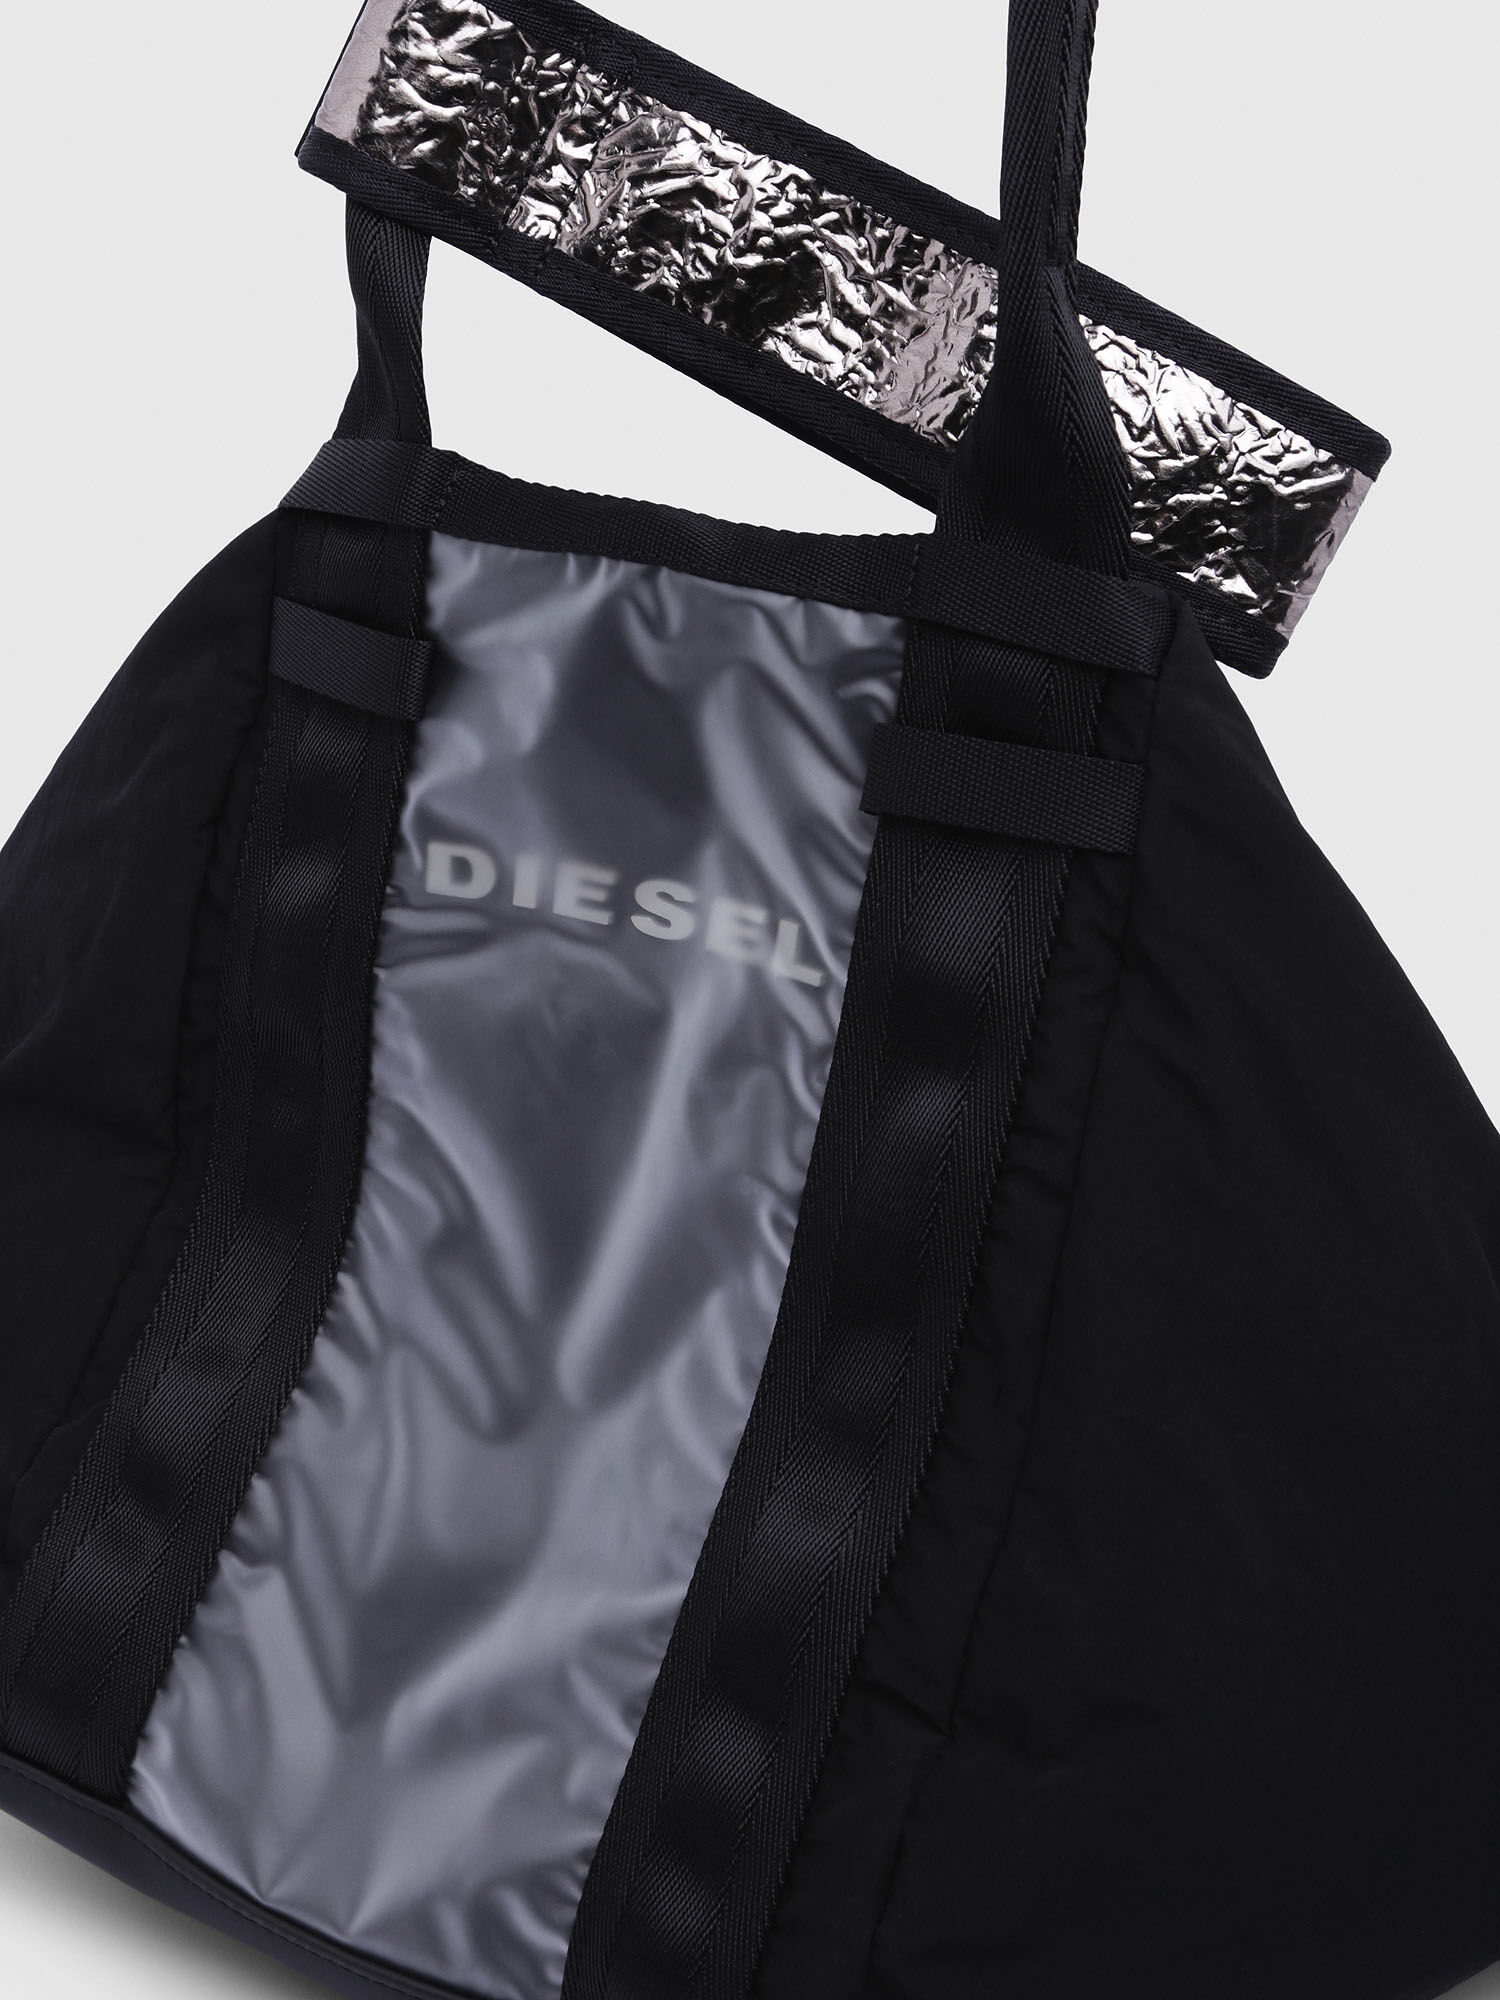 Diesel - D-CAGE SHOPPER, Black - Image 4